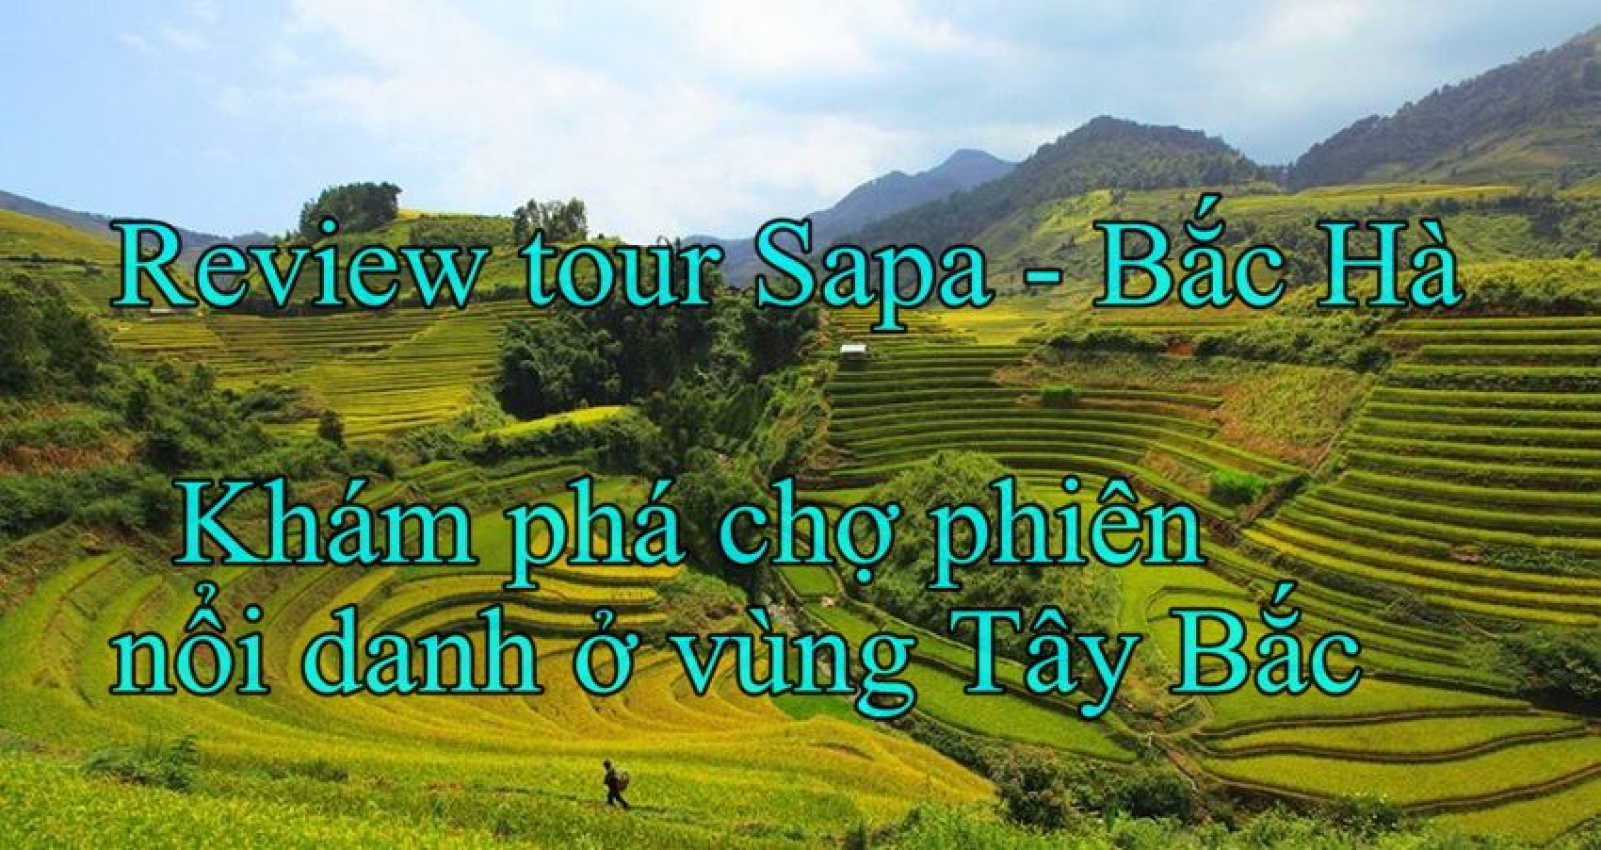 REVIEW TOUR GHÉP SAPA – BẮC HÀ, Du lịch Sapa